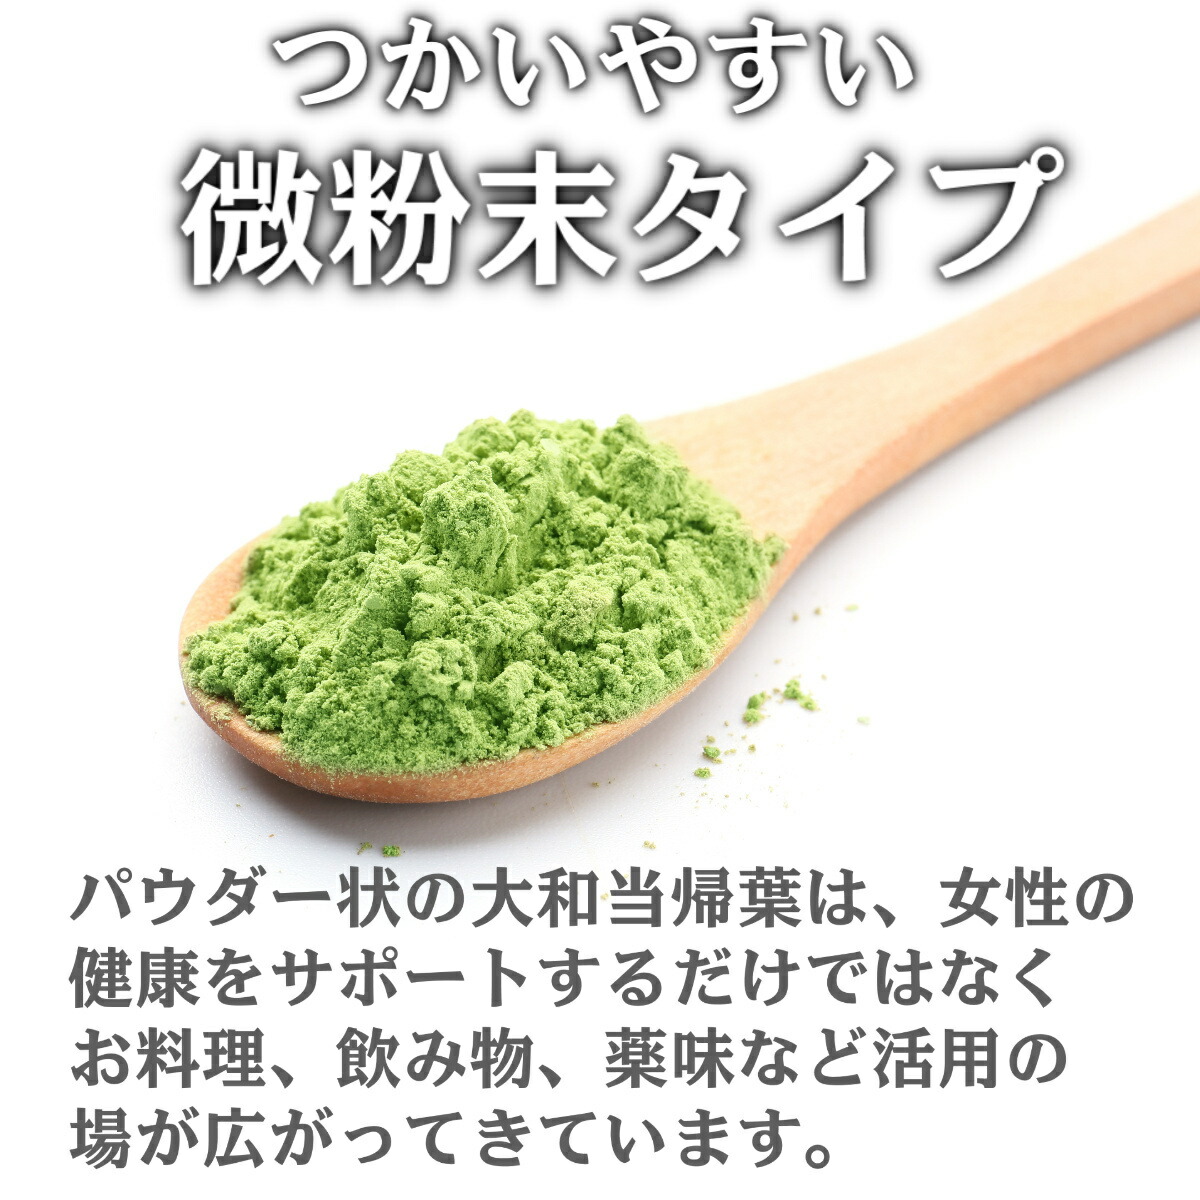  Yamato present . leaf no addition powder 100g ×5 sack set Nara prefecture production domestic production Yamato present . vitamin supplement nutrition assistance food 